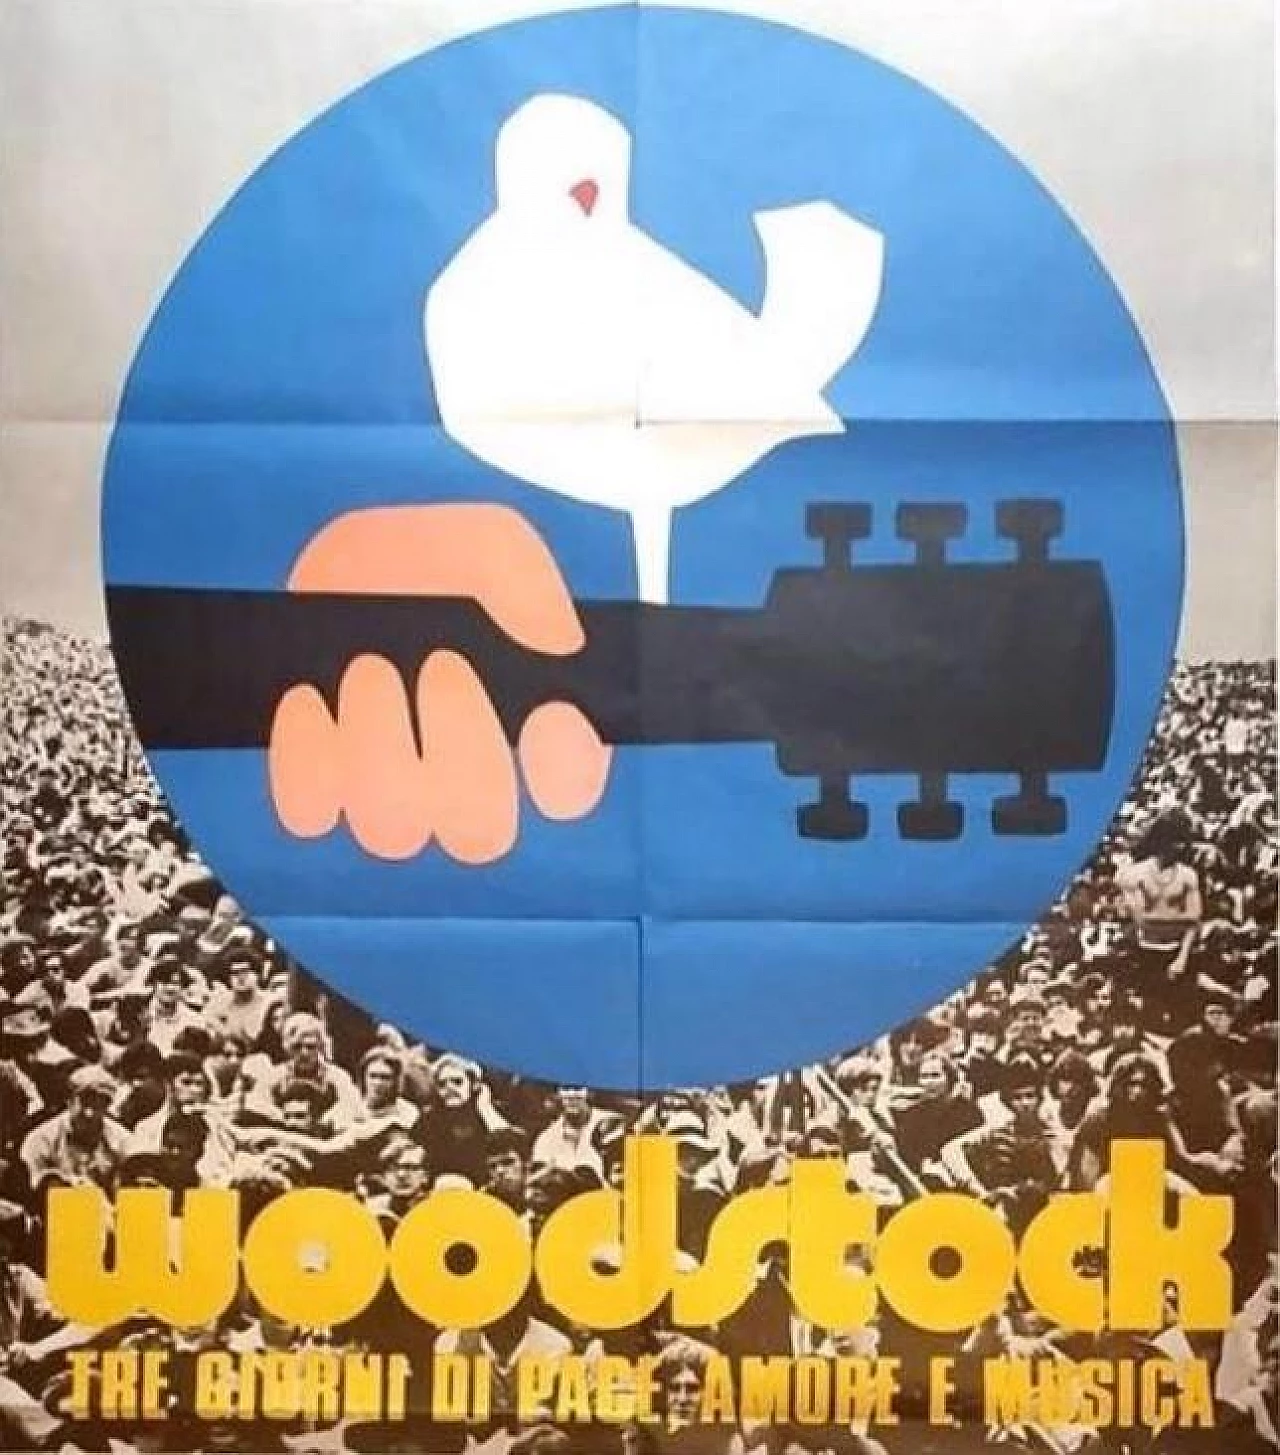 Woodstock film poster, 1969 3